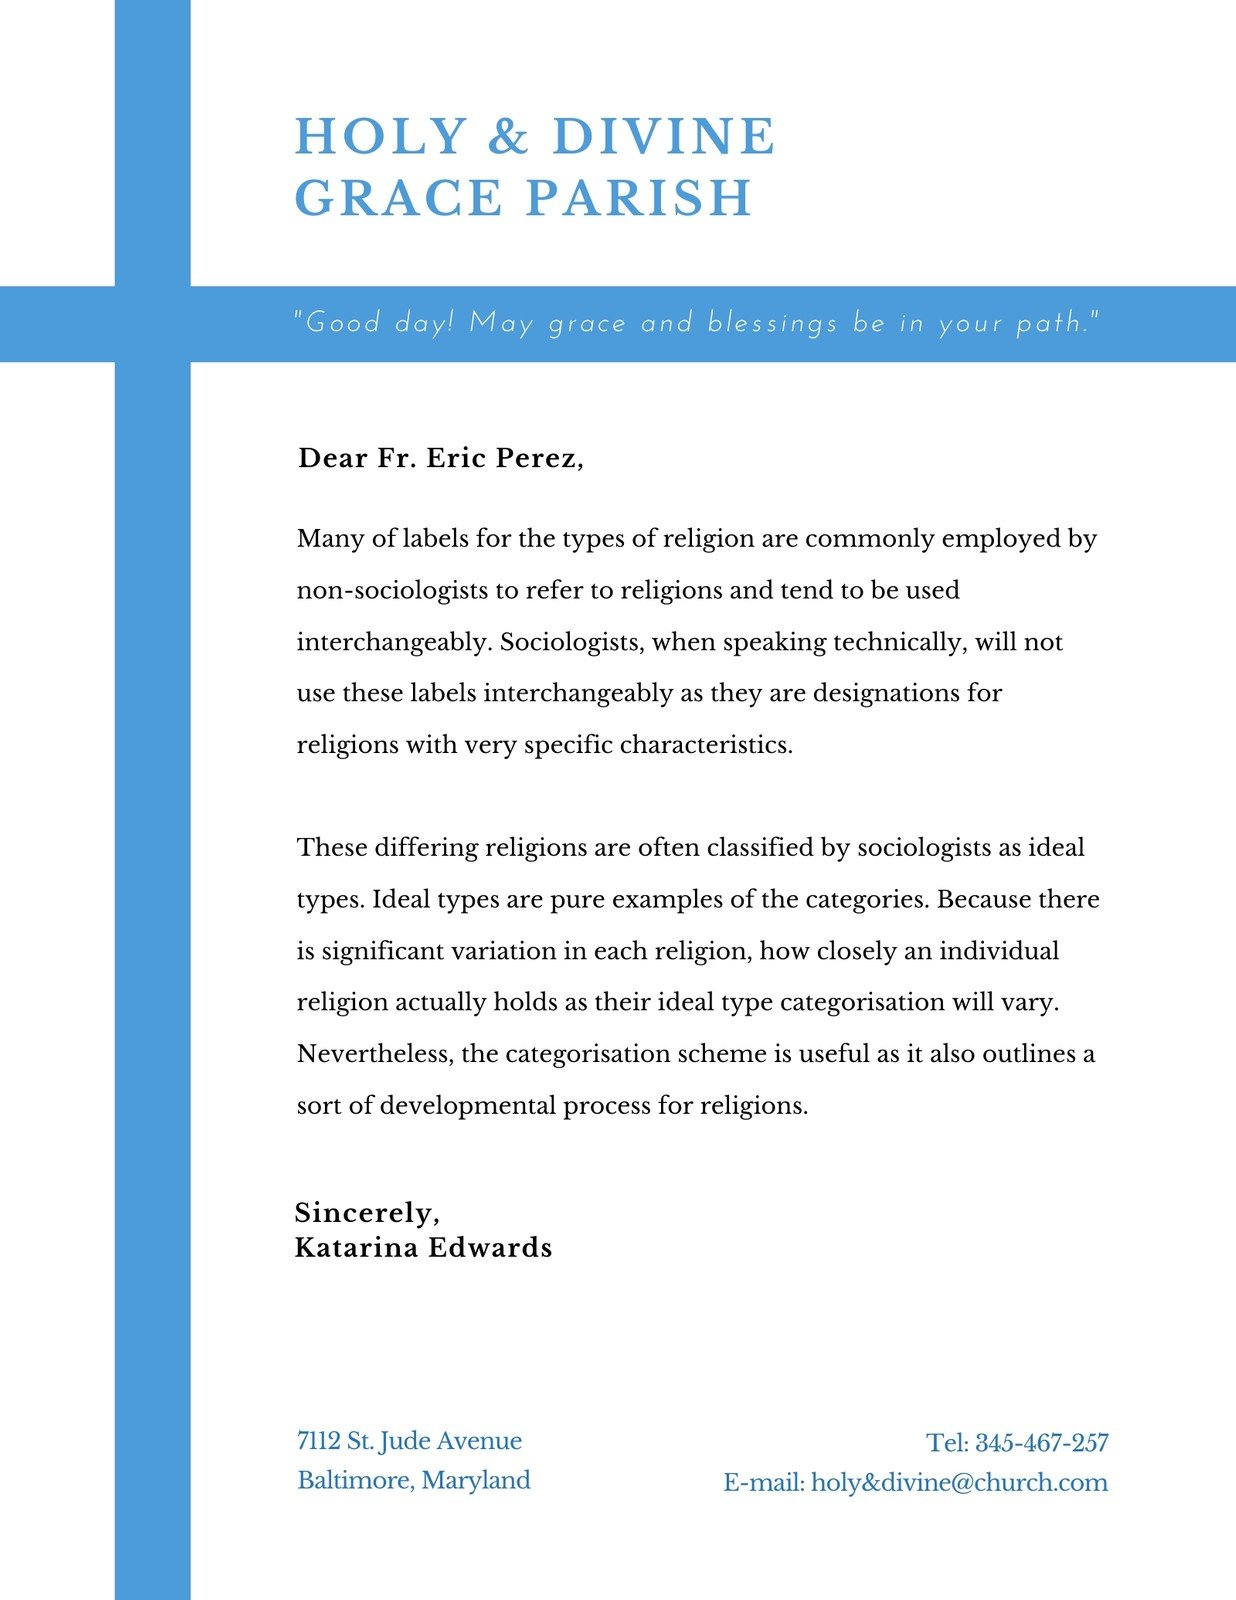 Free, printable, customizable church letterhead templates  Canva With Christian Letterhead Templates Free